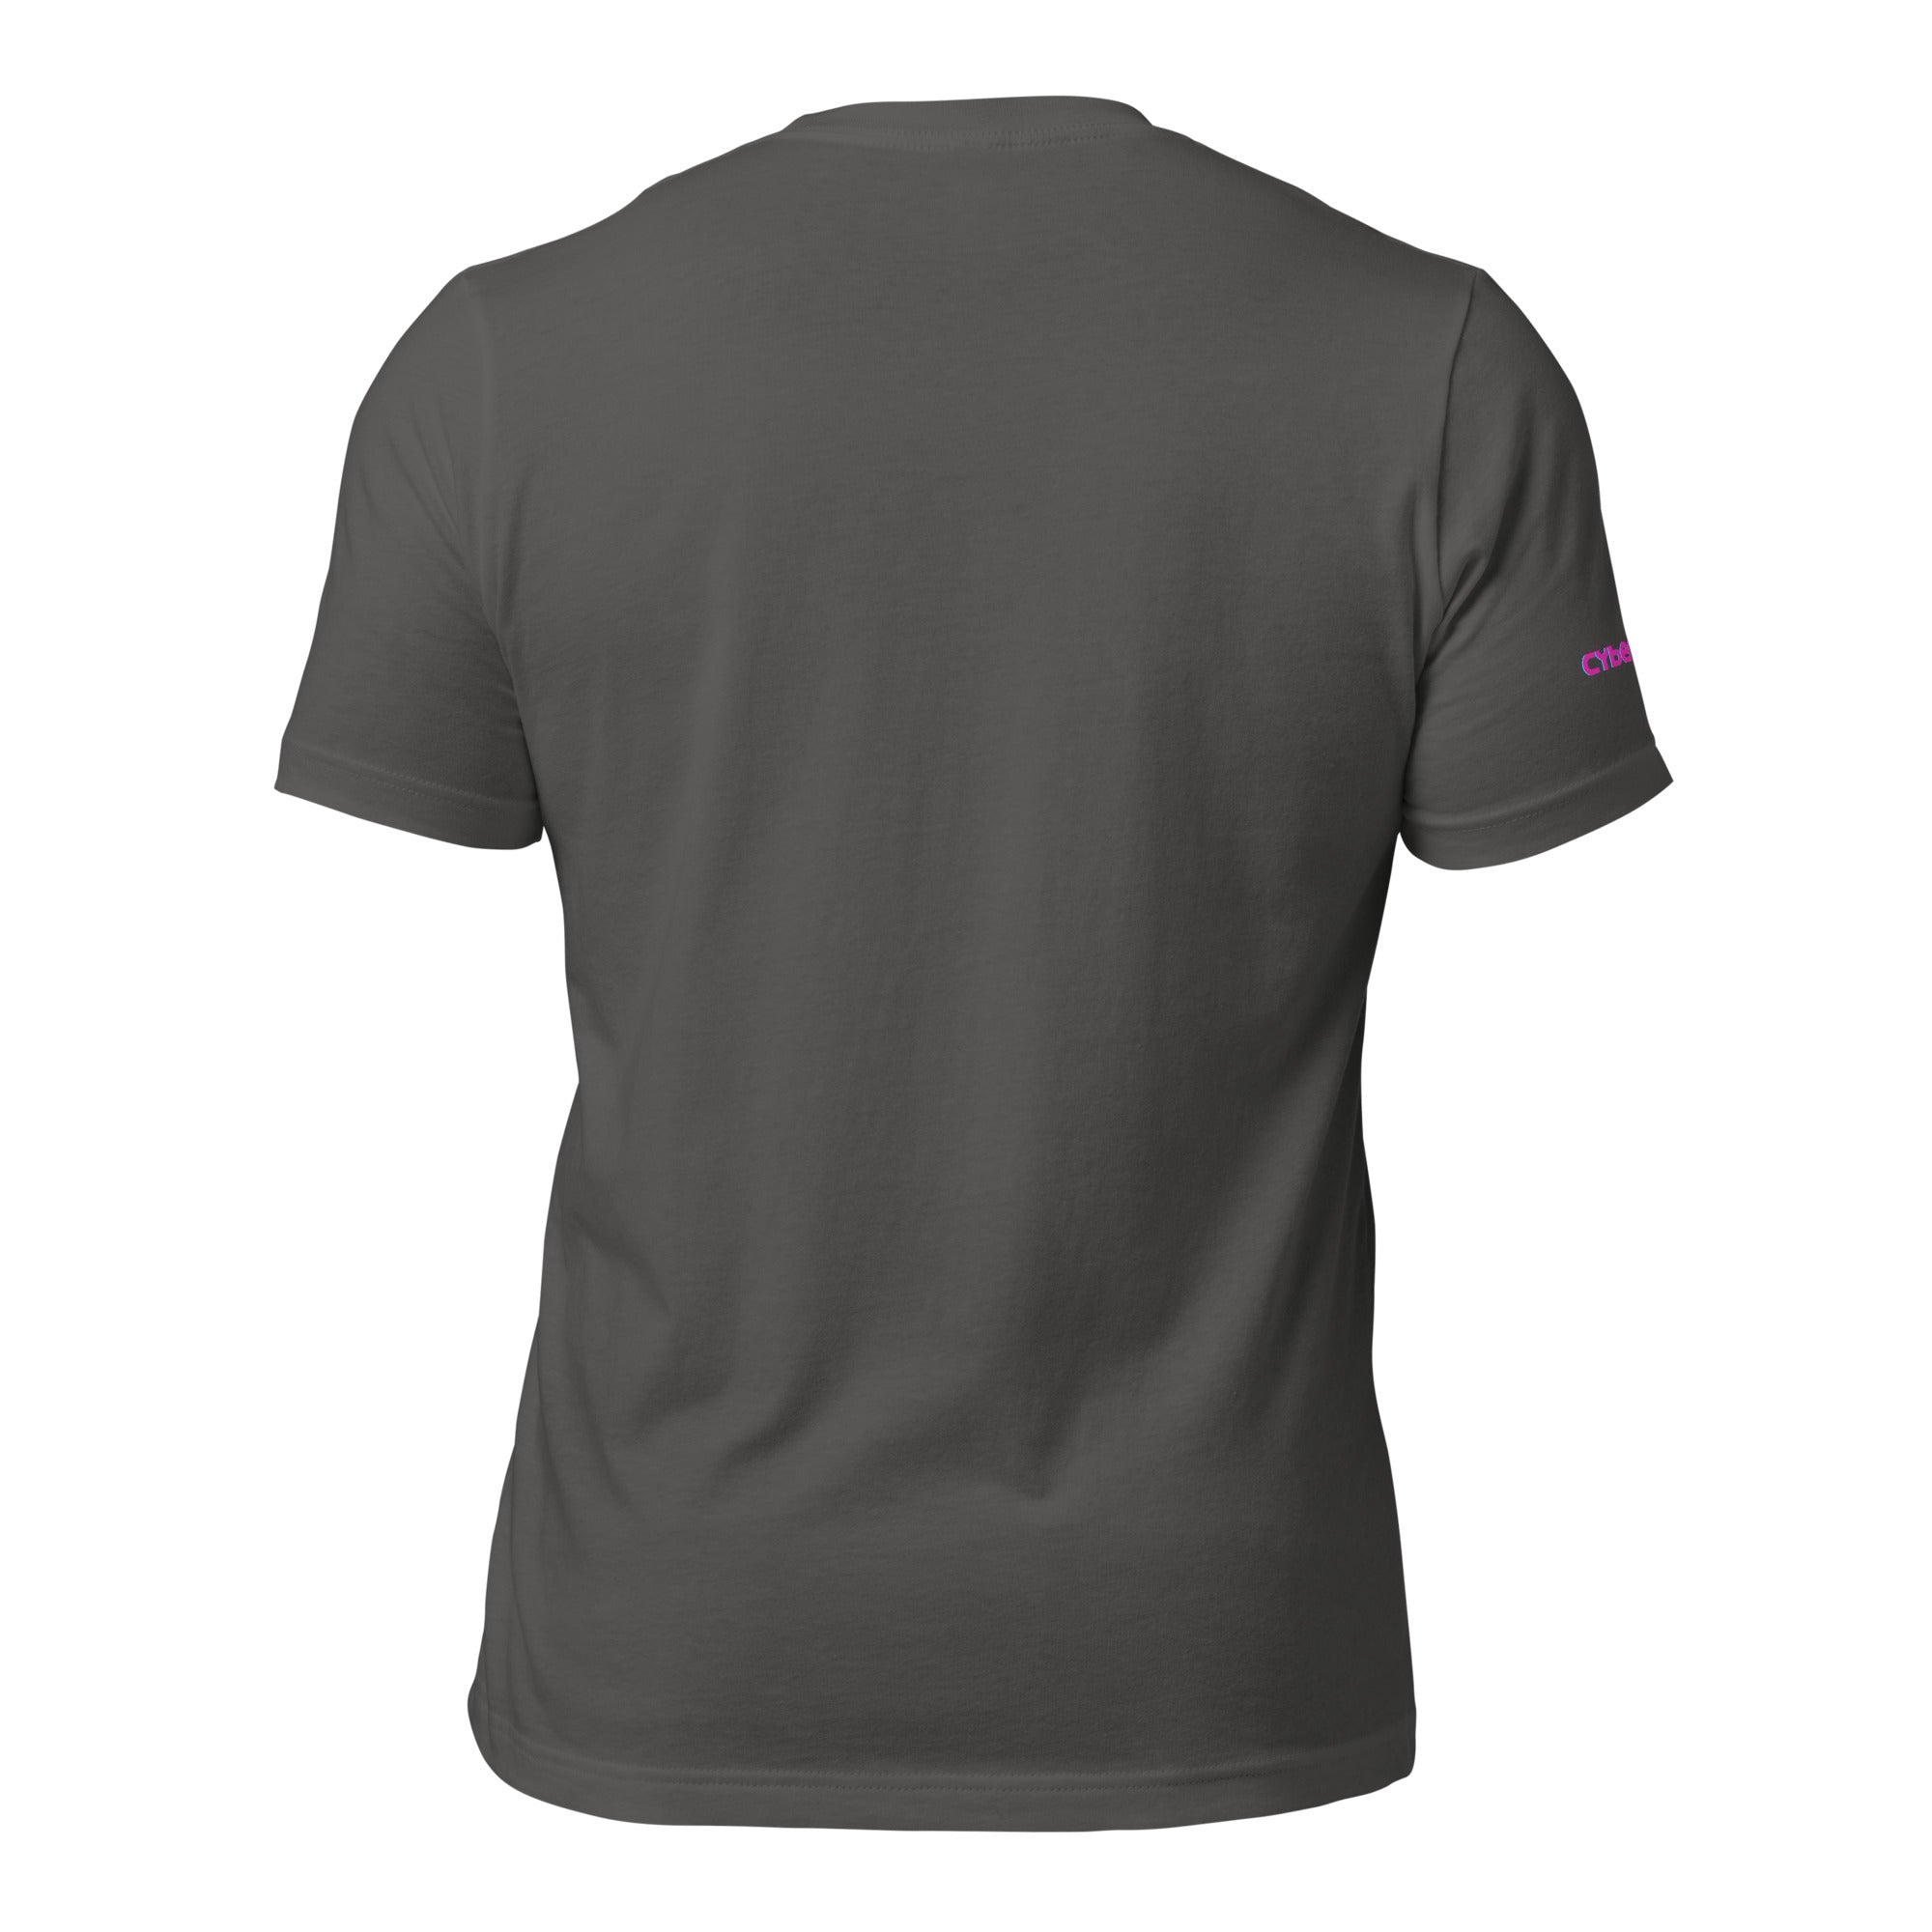 Unisex Crew Neck T-Shirt - Cyberpunk - GRAPHIC T-SHIRTS